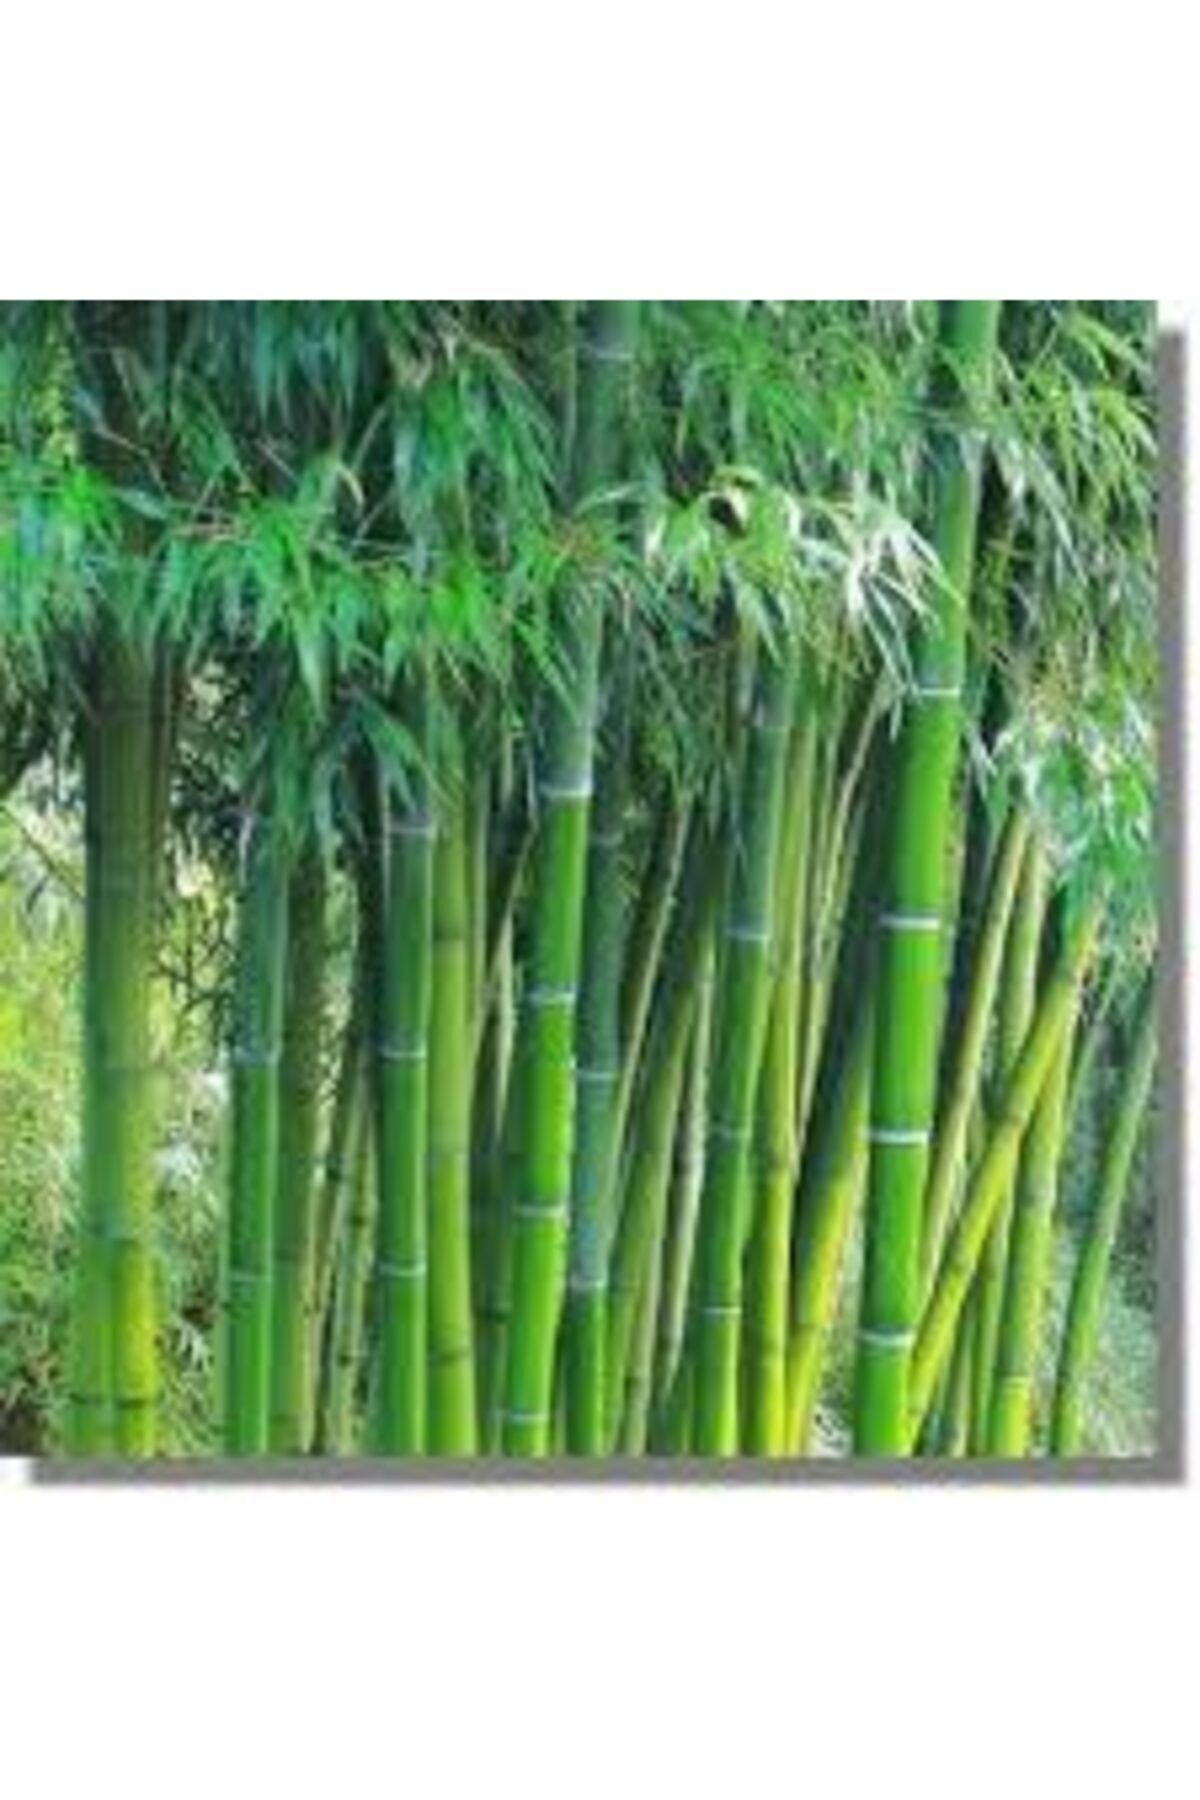 ata tohumculuk 5 Adet Yeşil Bambu Ağaç Tohumu Orjinal Moso Bambu Tohumu Saksı Toprak Sürpriz Hediye Sebze Tohumu